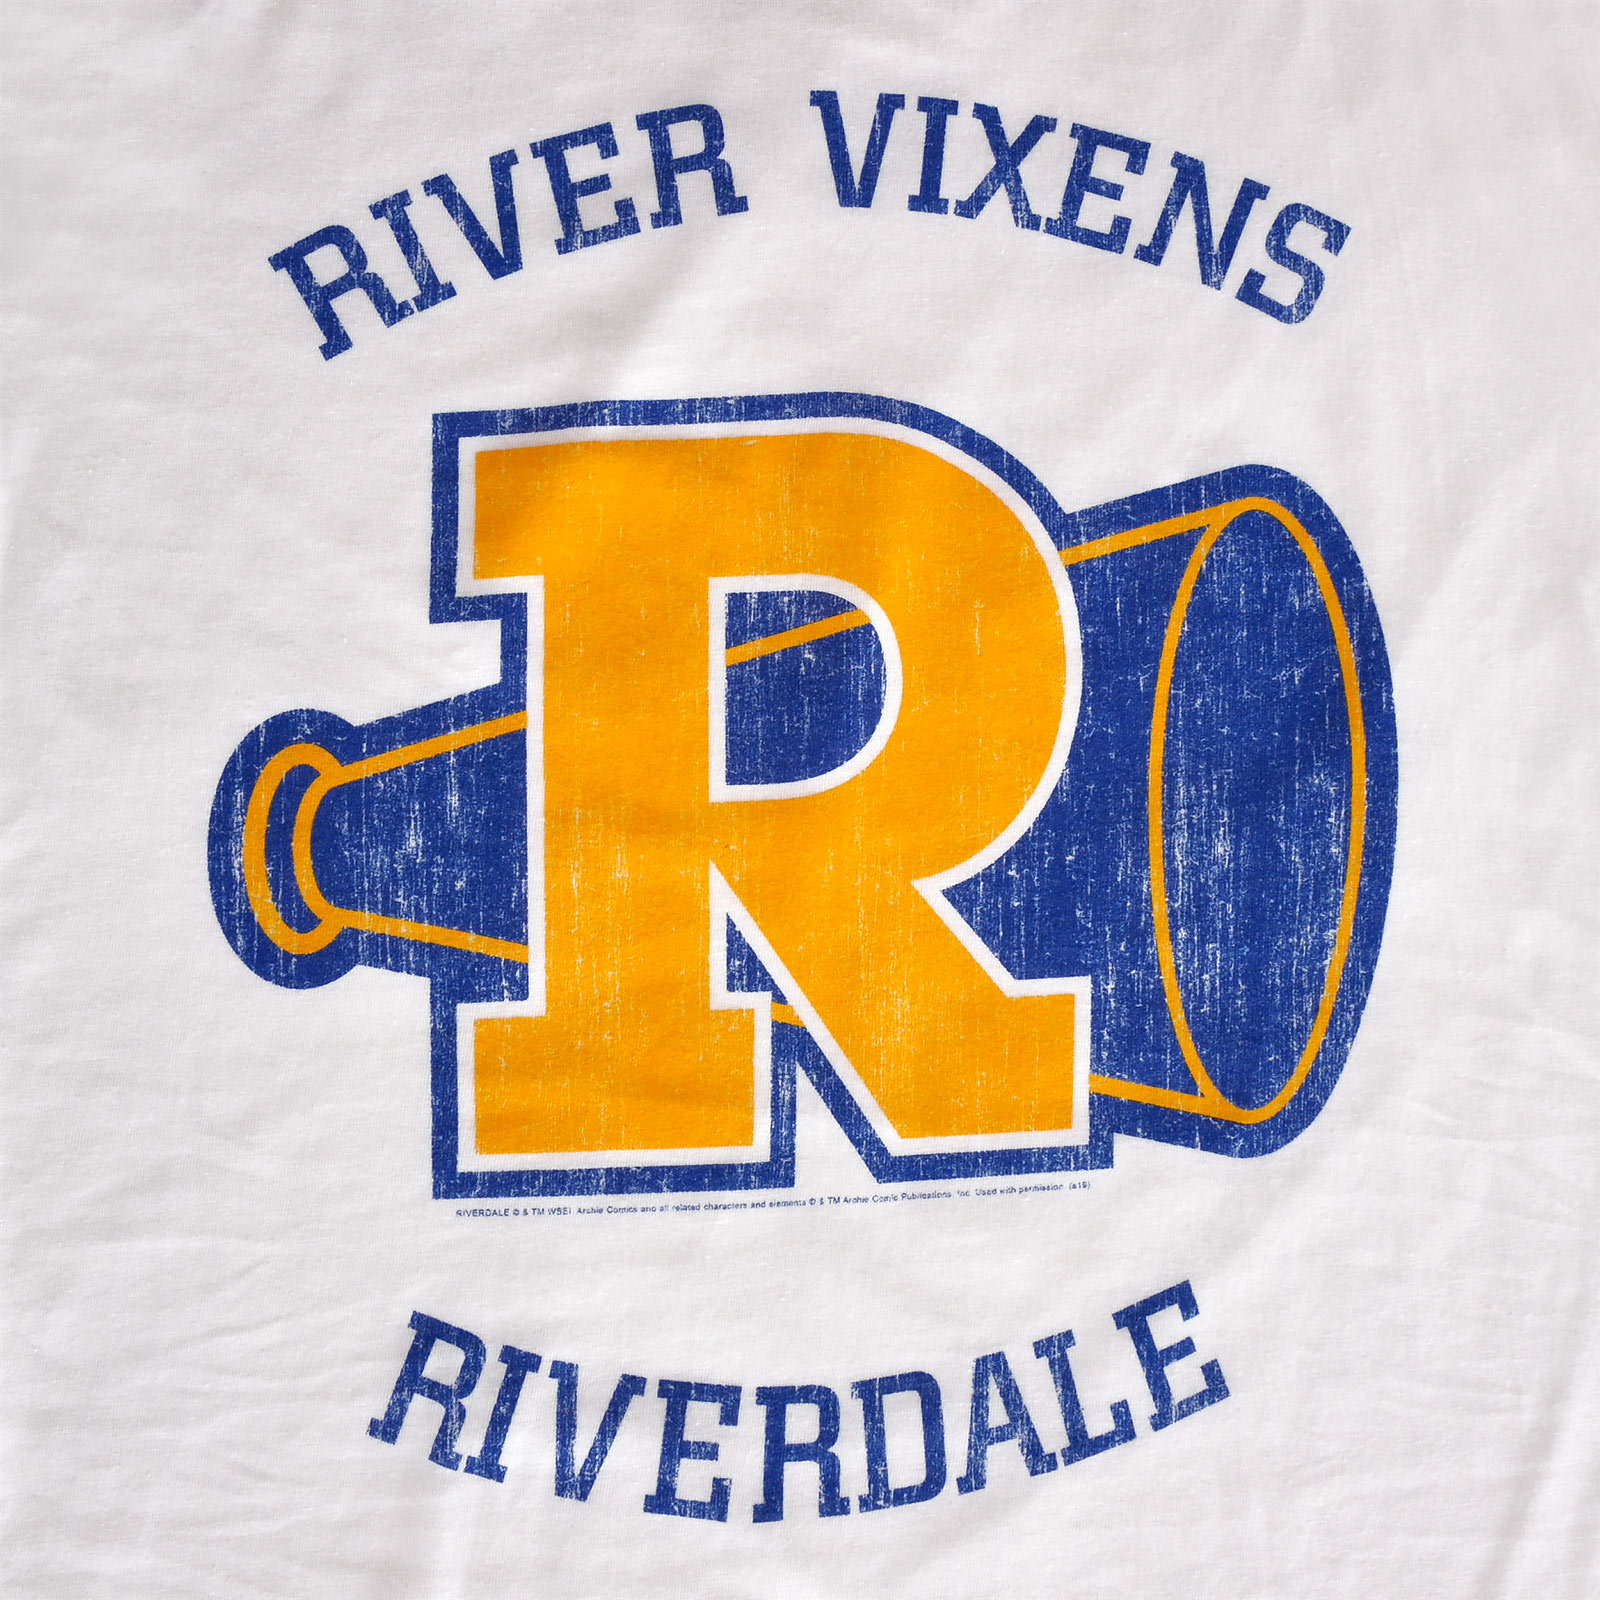 Riverdale - River Vixens Dames T-shirt wit